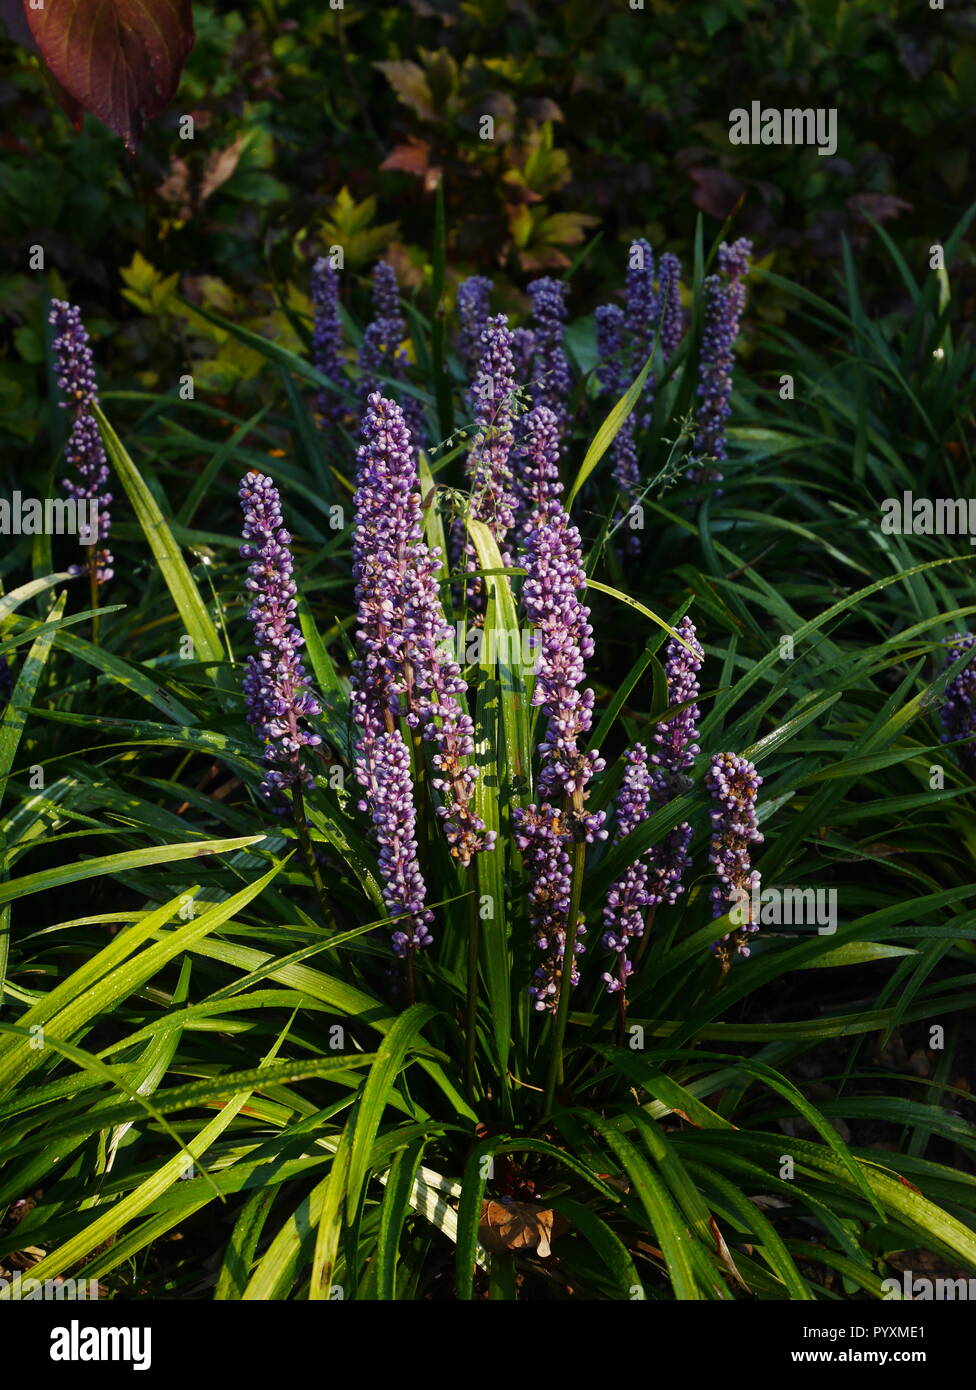 Clump of purple liriope muscari flowers and green grass-like foliage Stock Photo